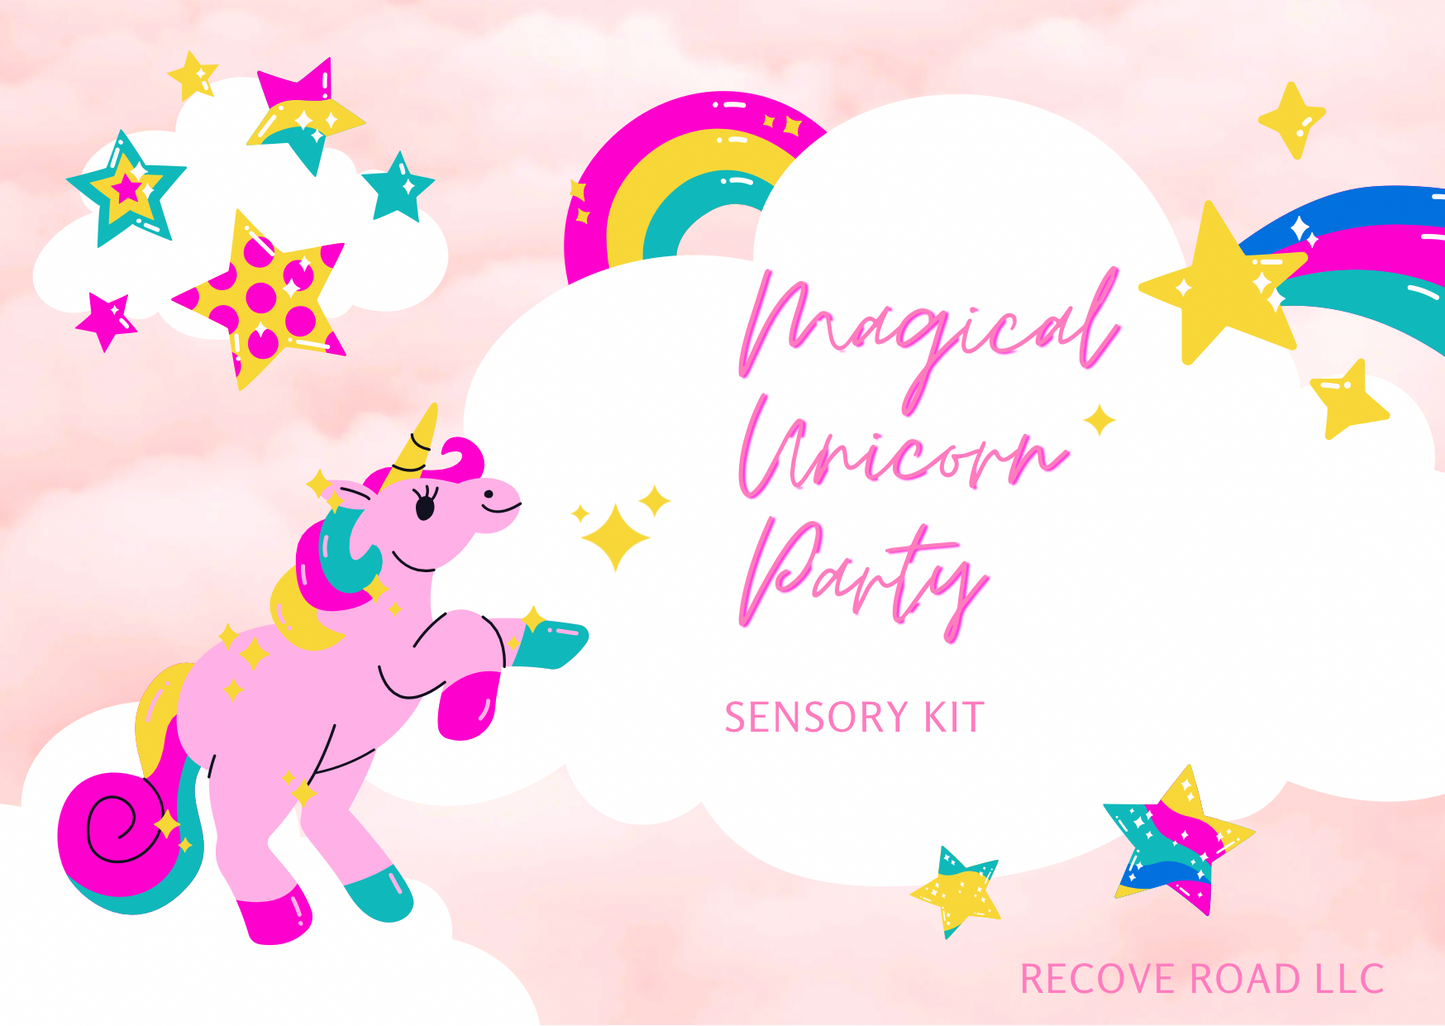 Magical Unicorn Sensory Kit